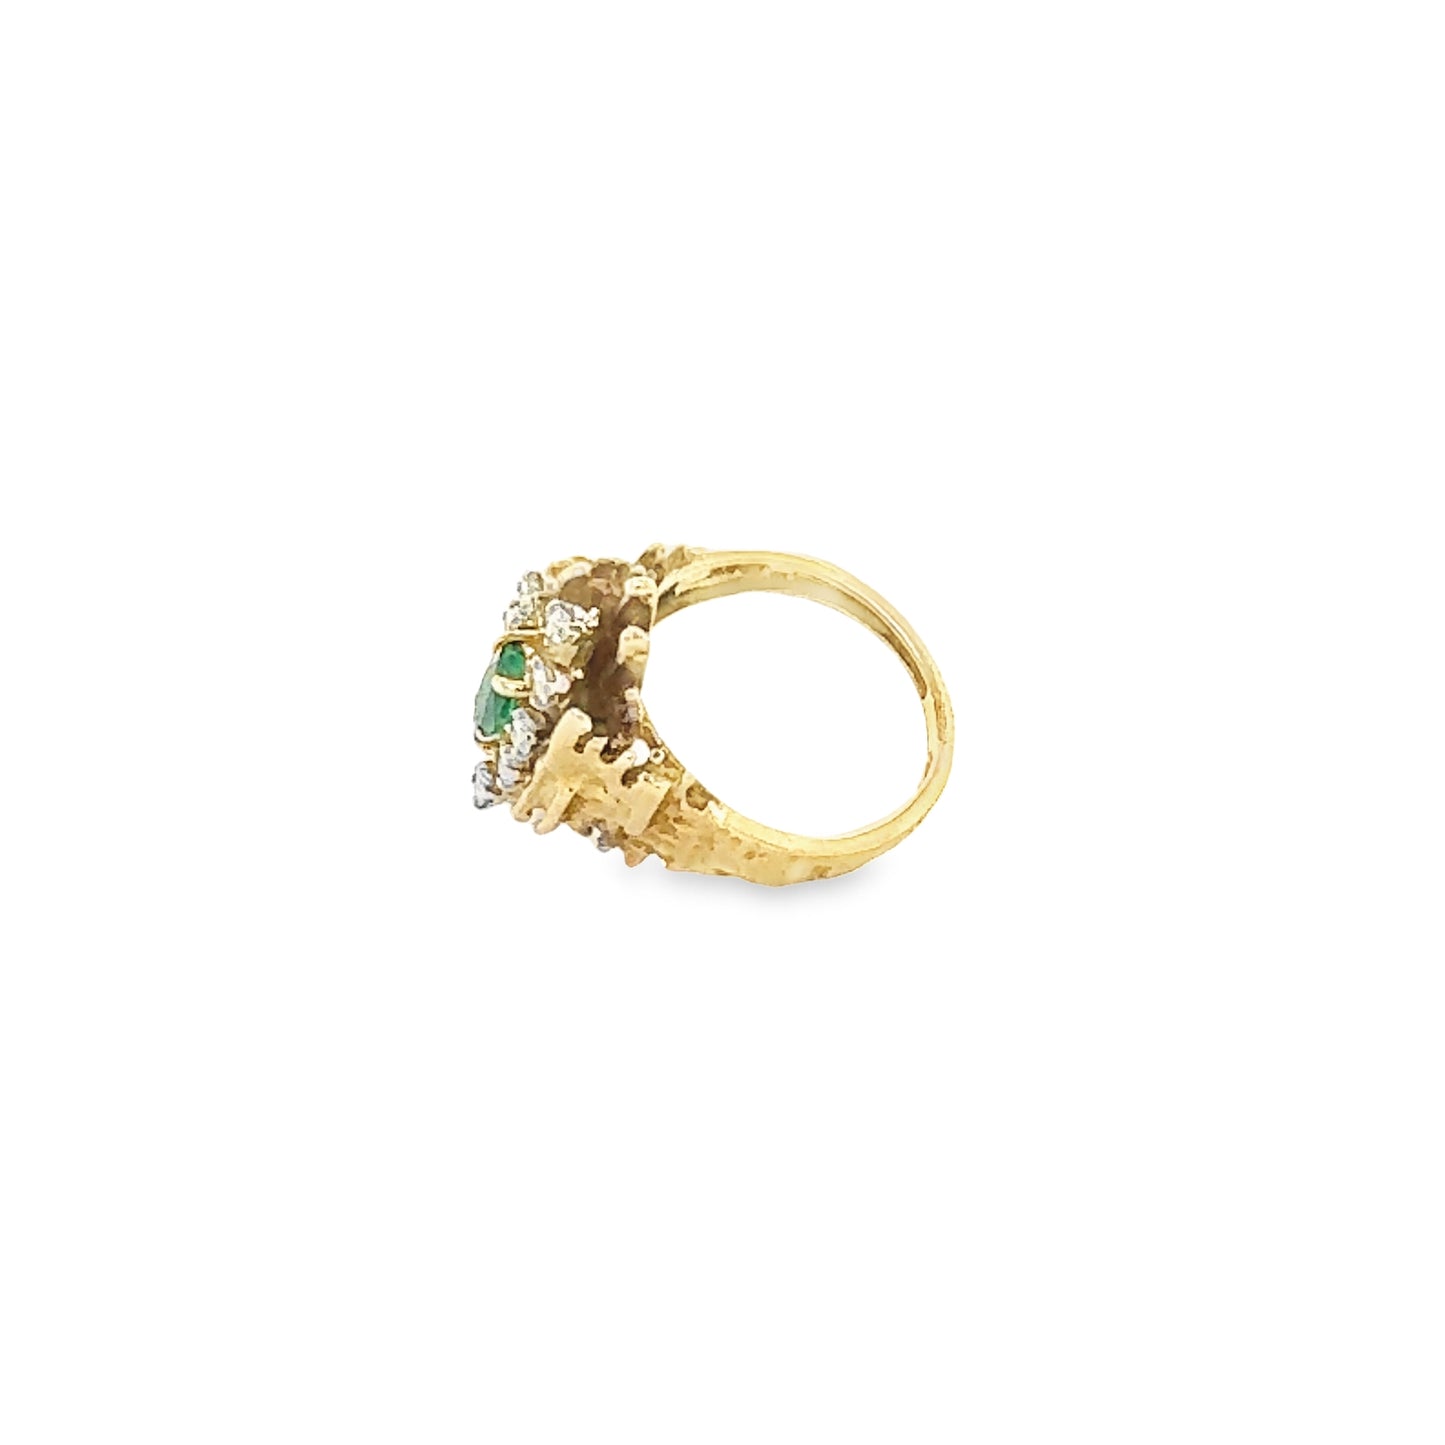 Vintage looking emerald & diamond ring